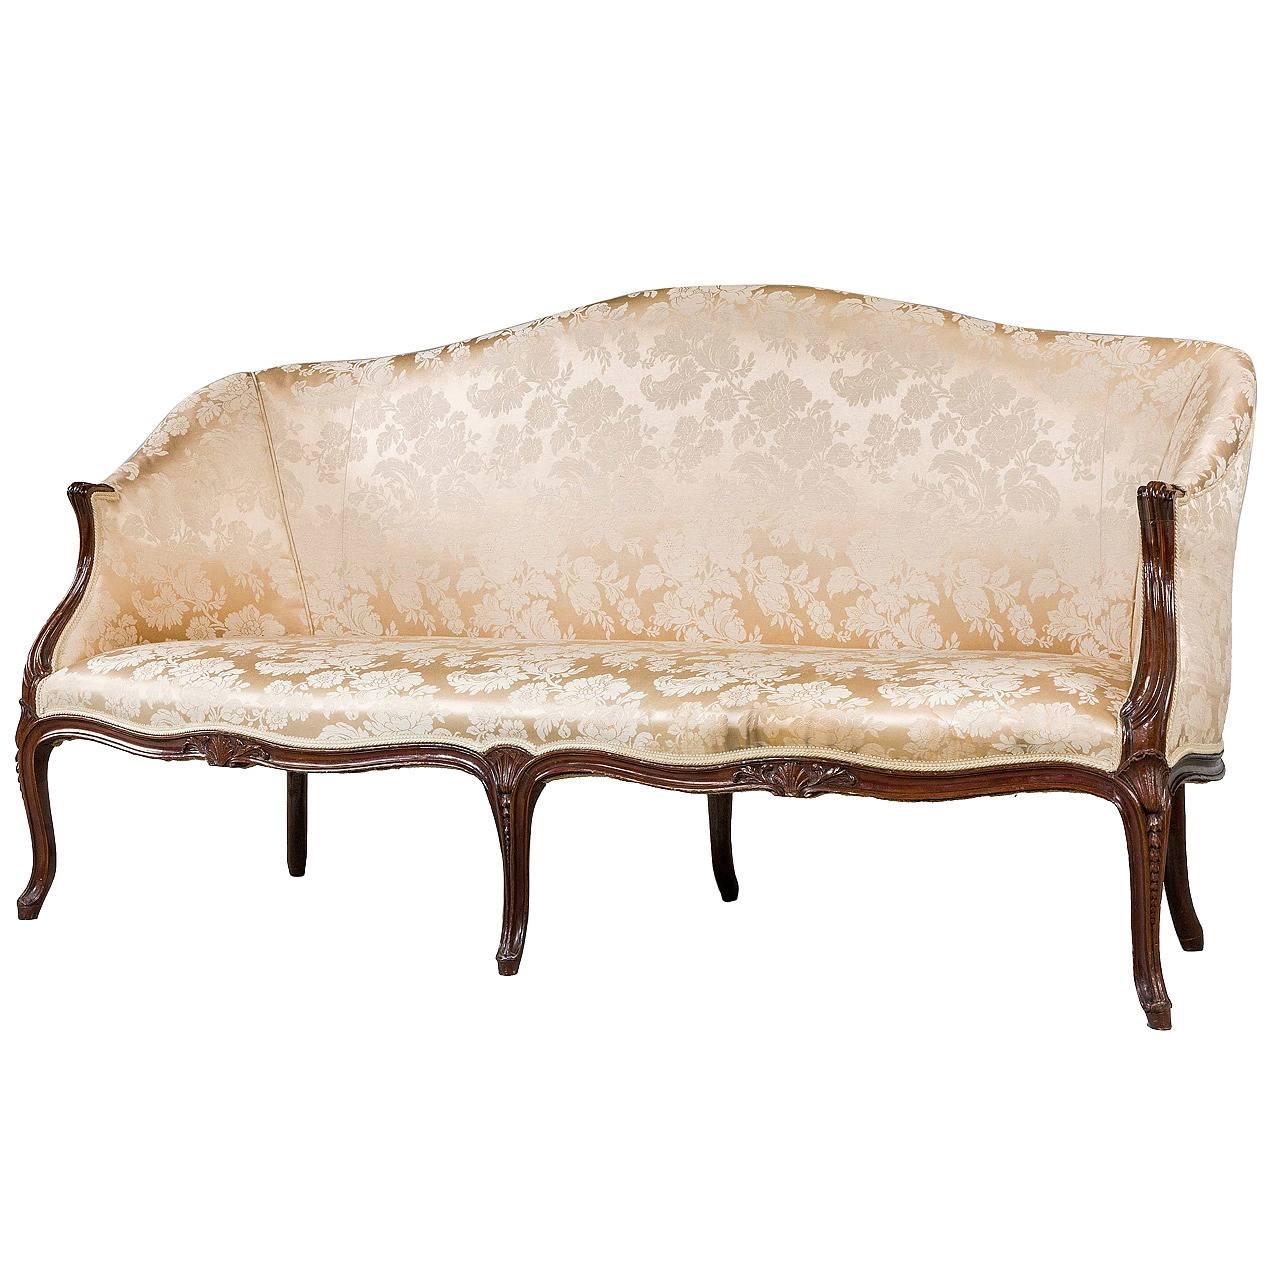 George III Period Sofa